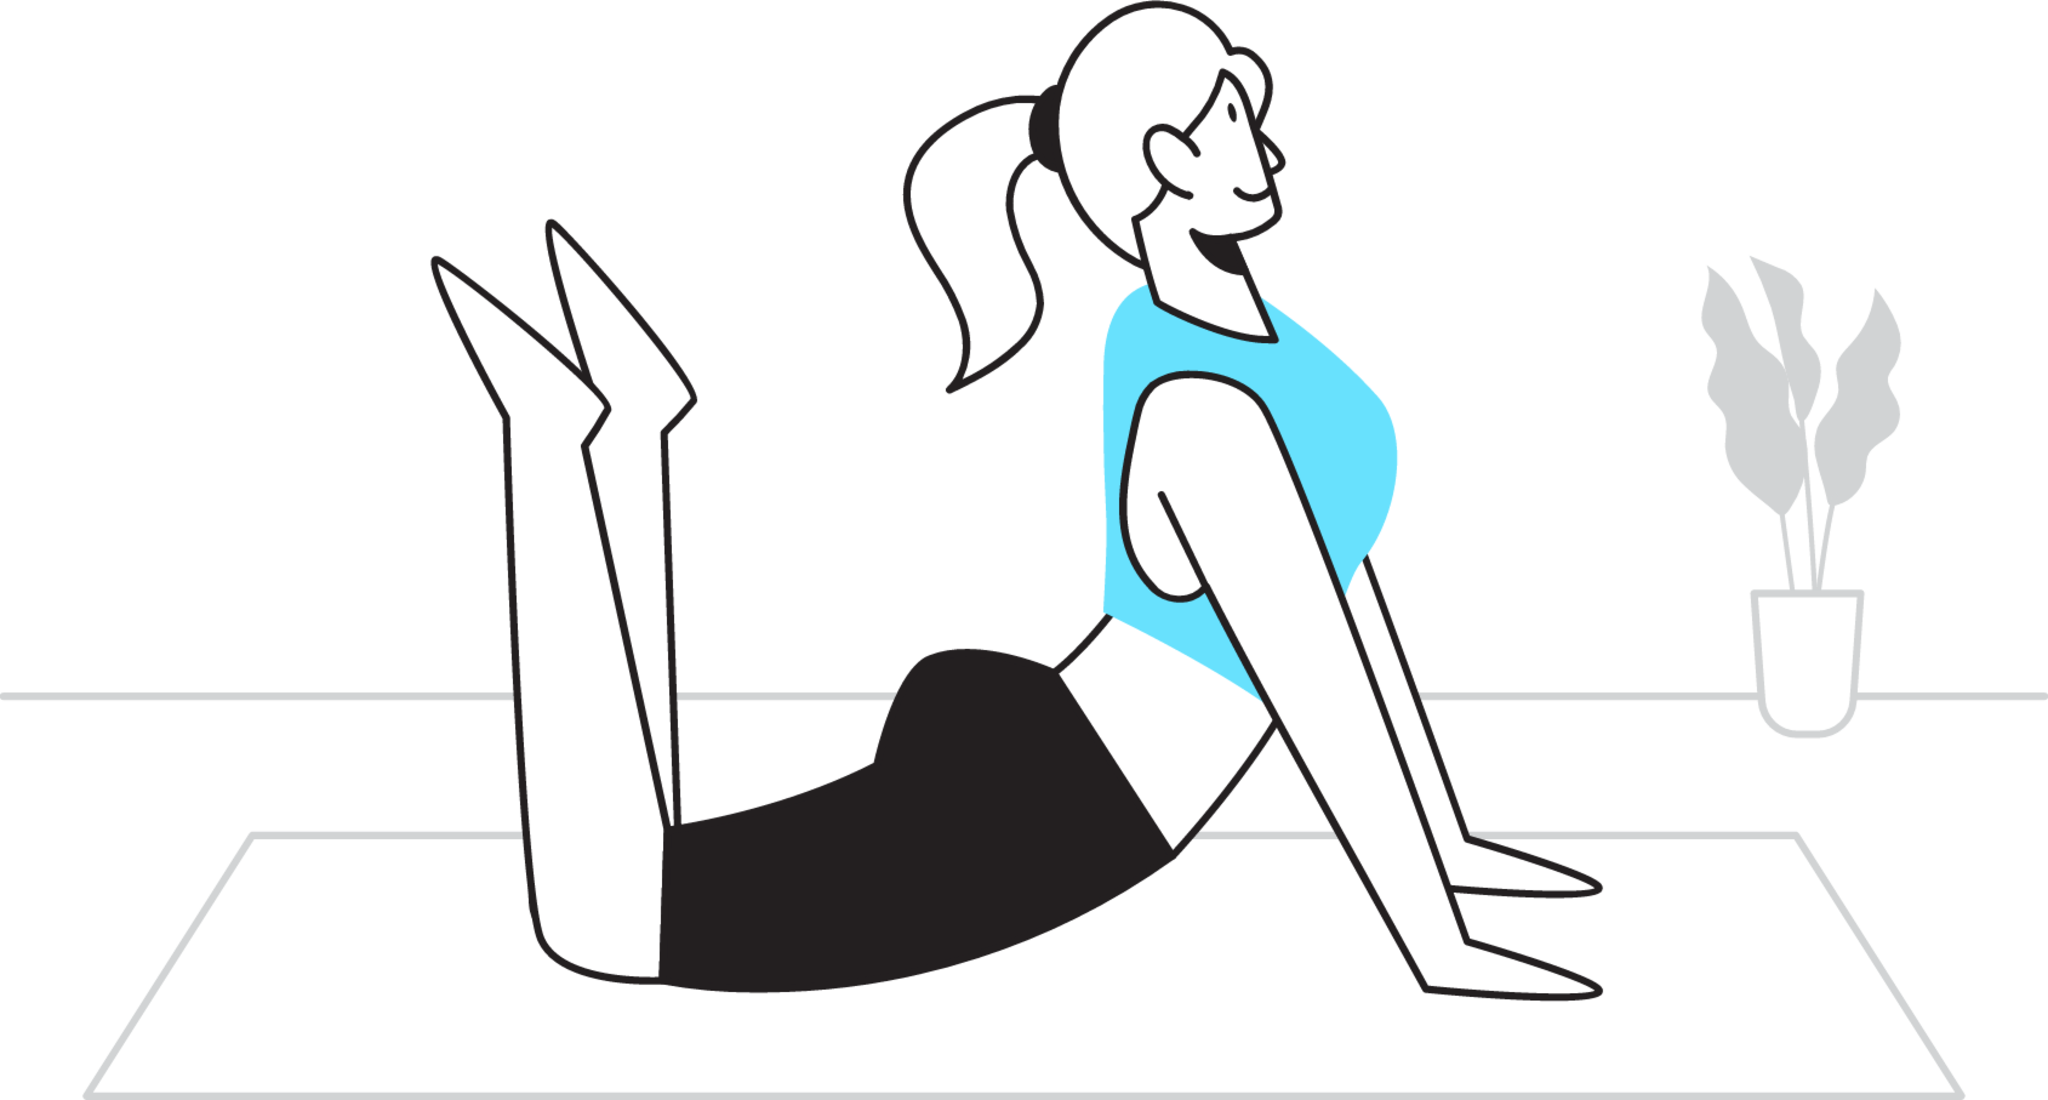 Yoga position illustration